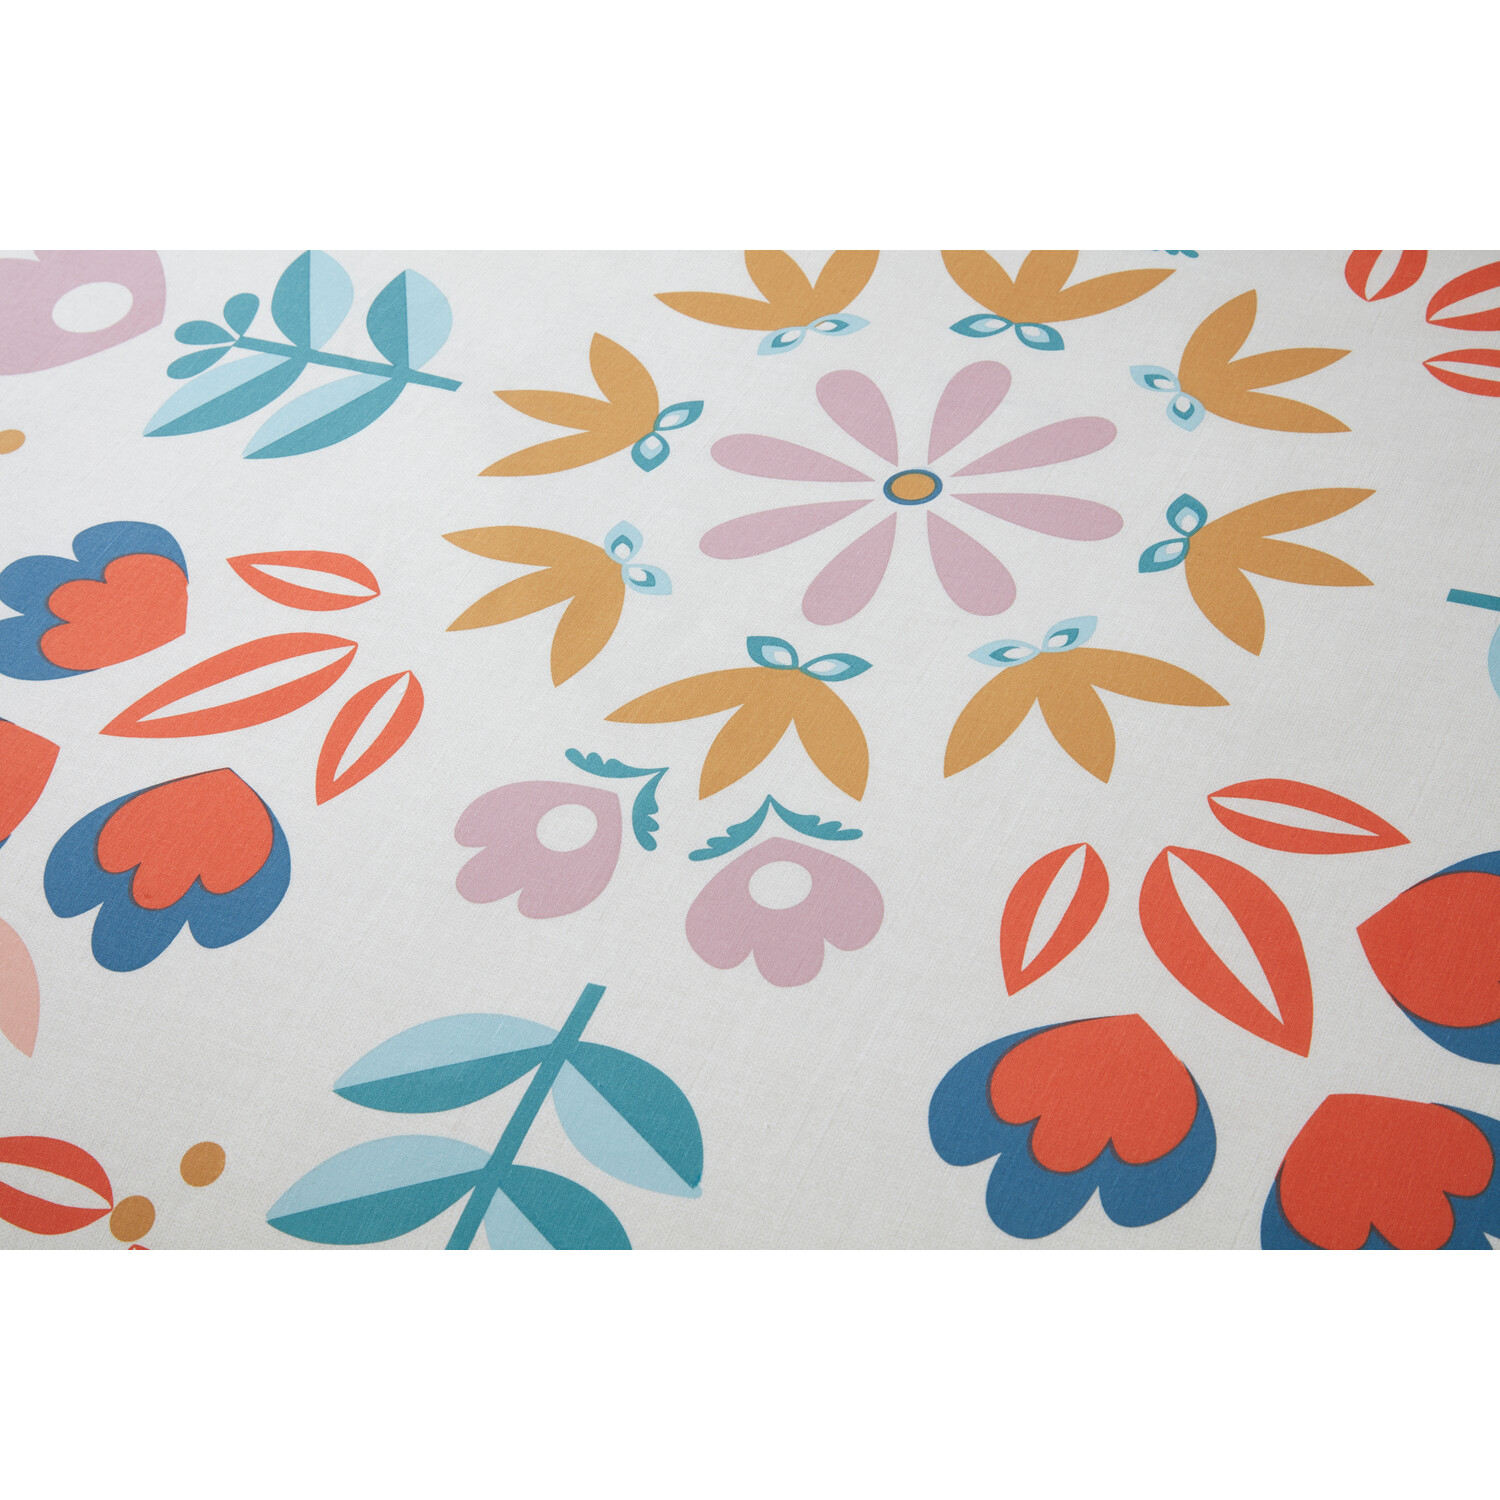 Amari Floral Duvet Cover and Pillowcase Set - King Image 5